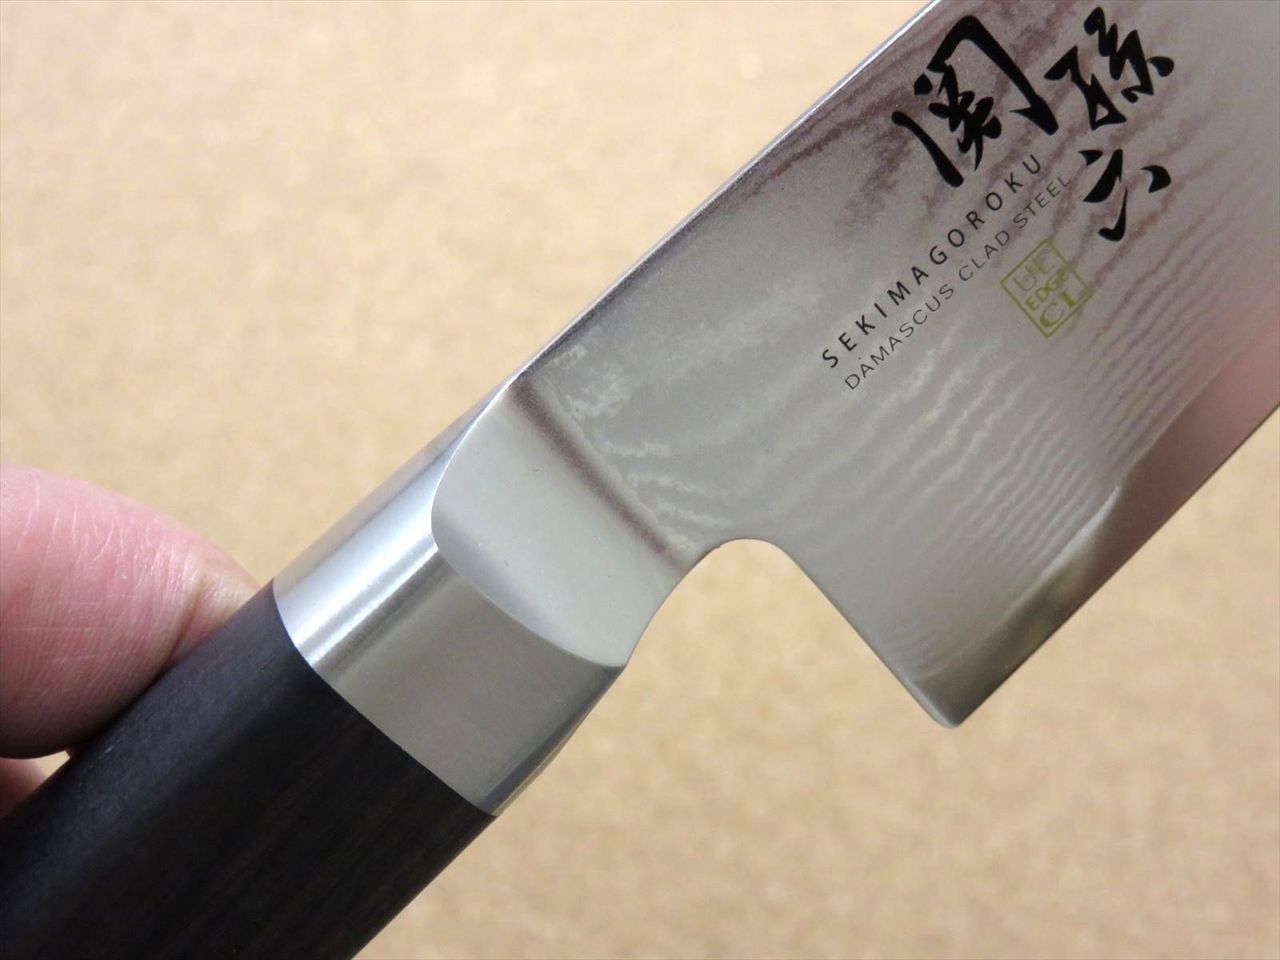 Japanese KAI SEKI MAGOROKU Kitchen Gyuto Chef Knife 180mm 7" Damascus SEKI JAPAN